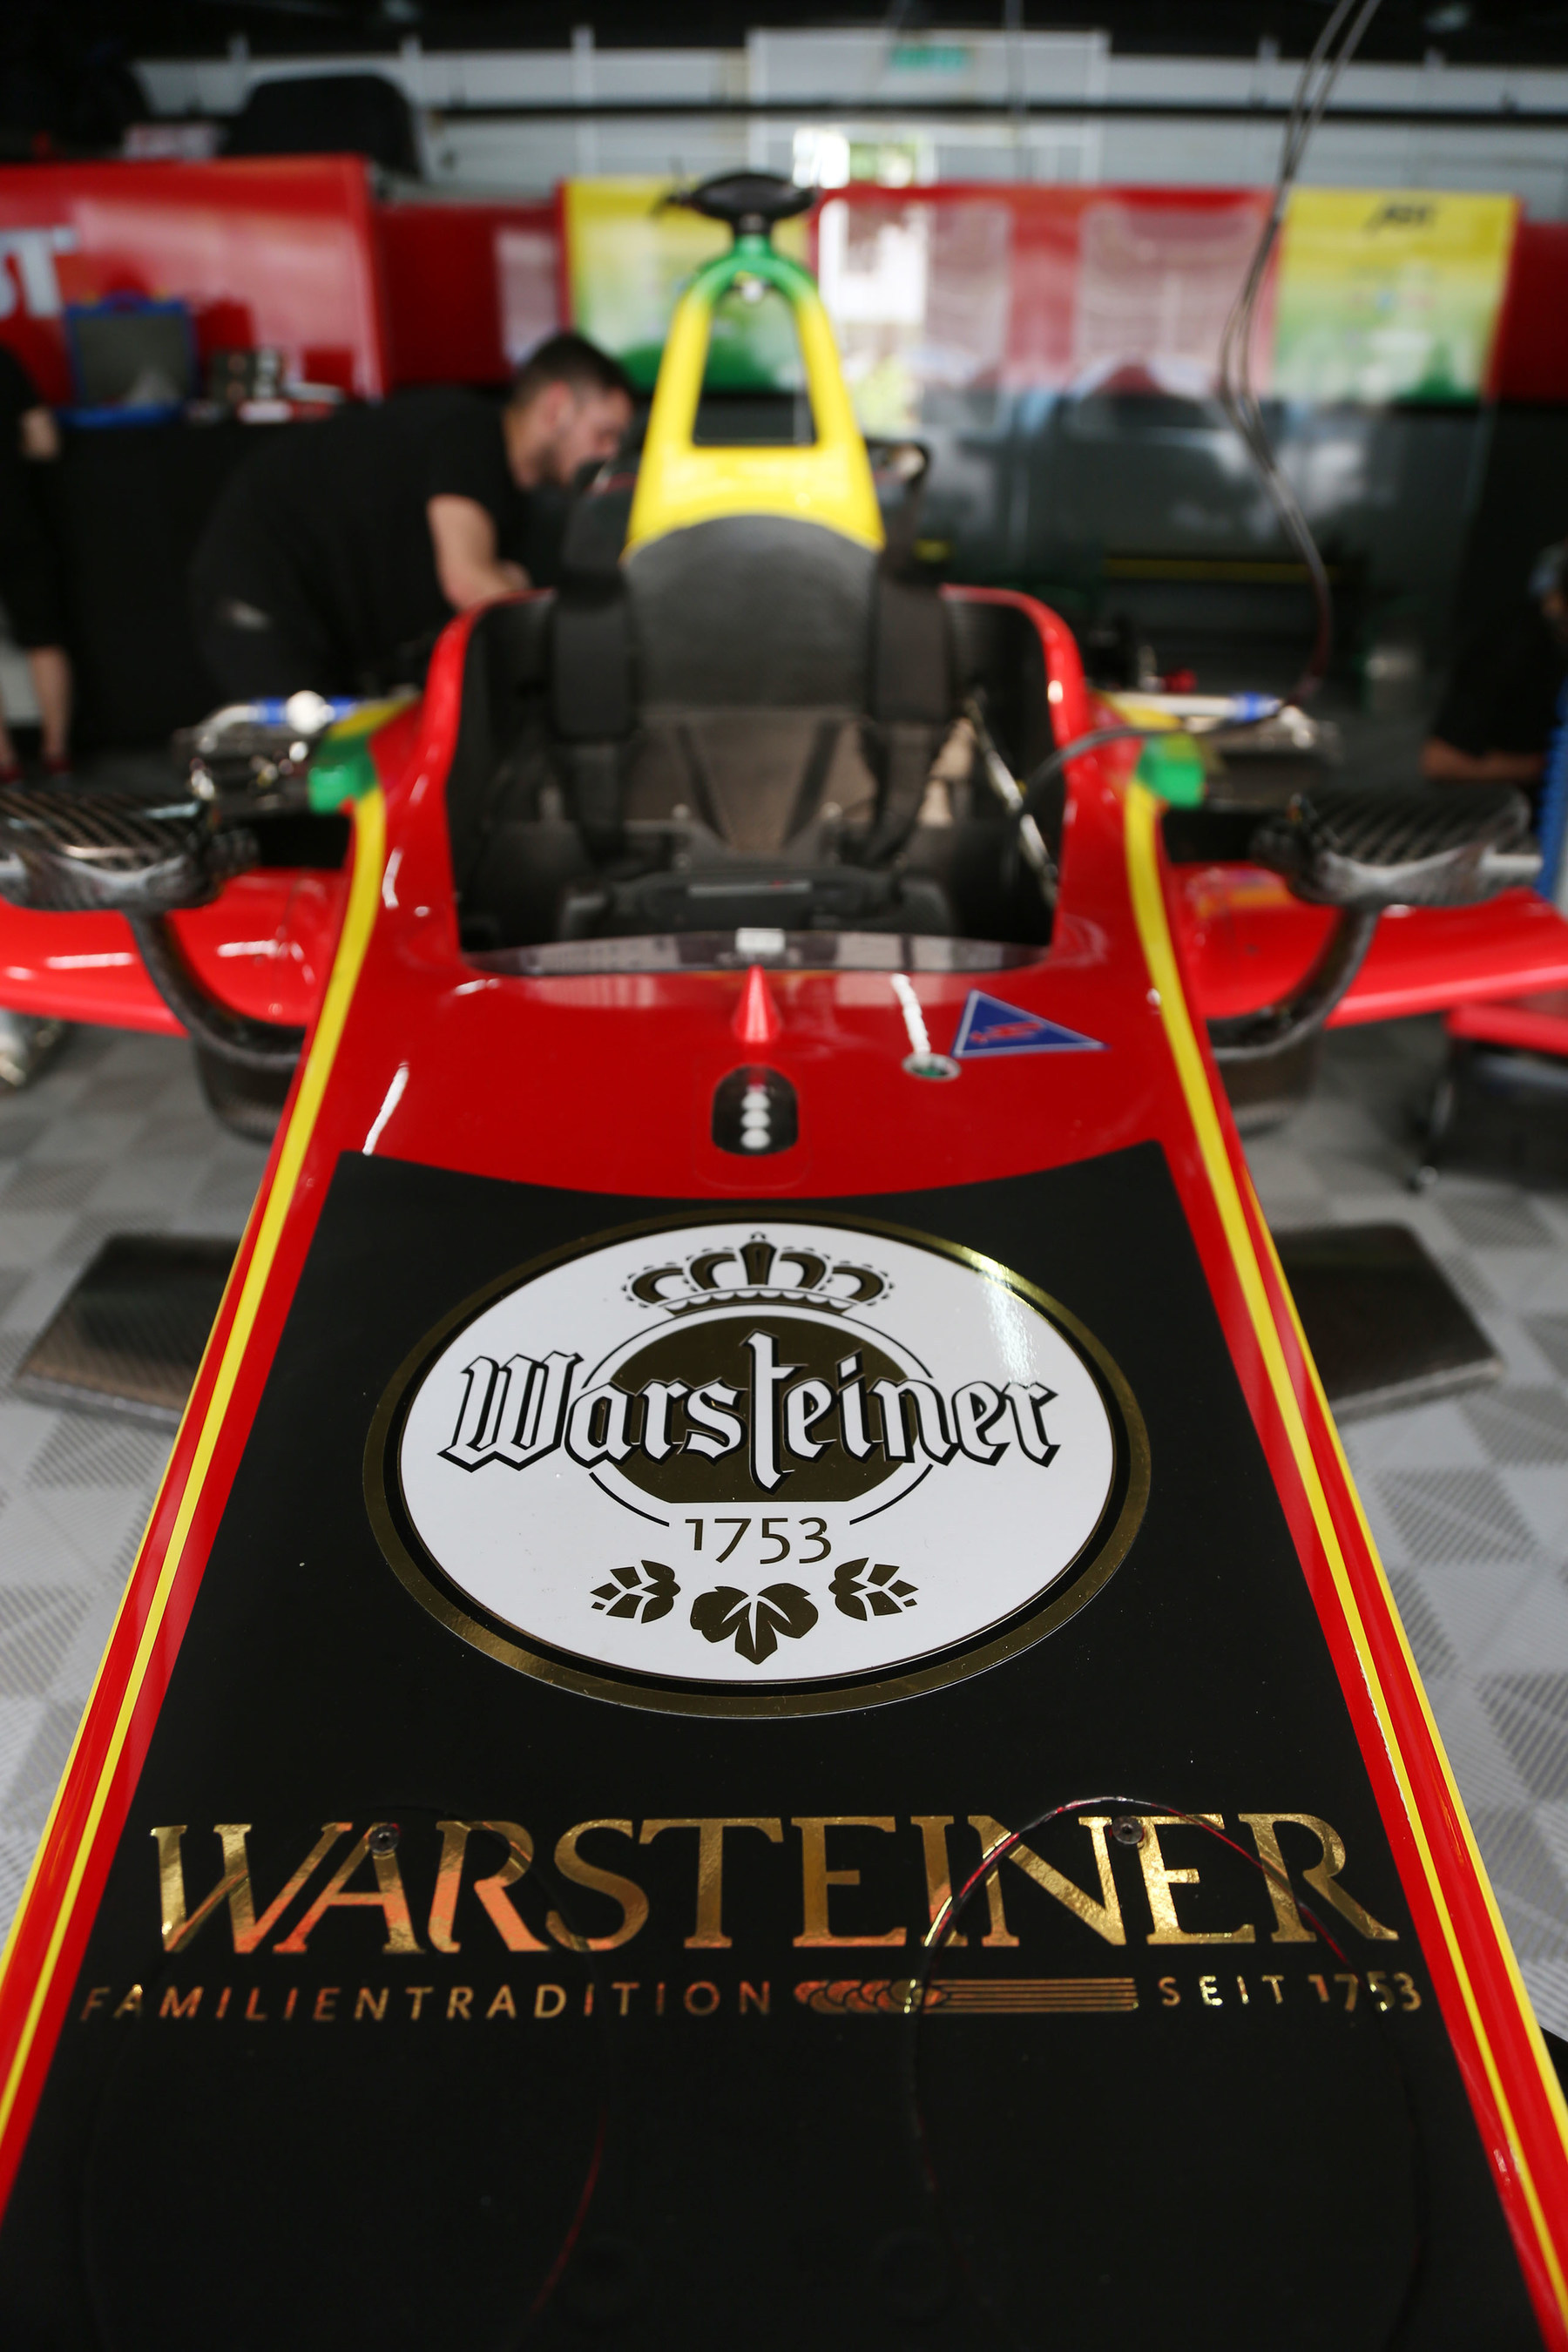 Warsteiner is the Official Team Partner of the Audi Sport ABT Formula E team.